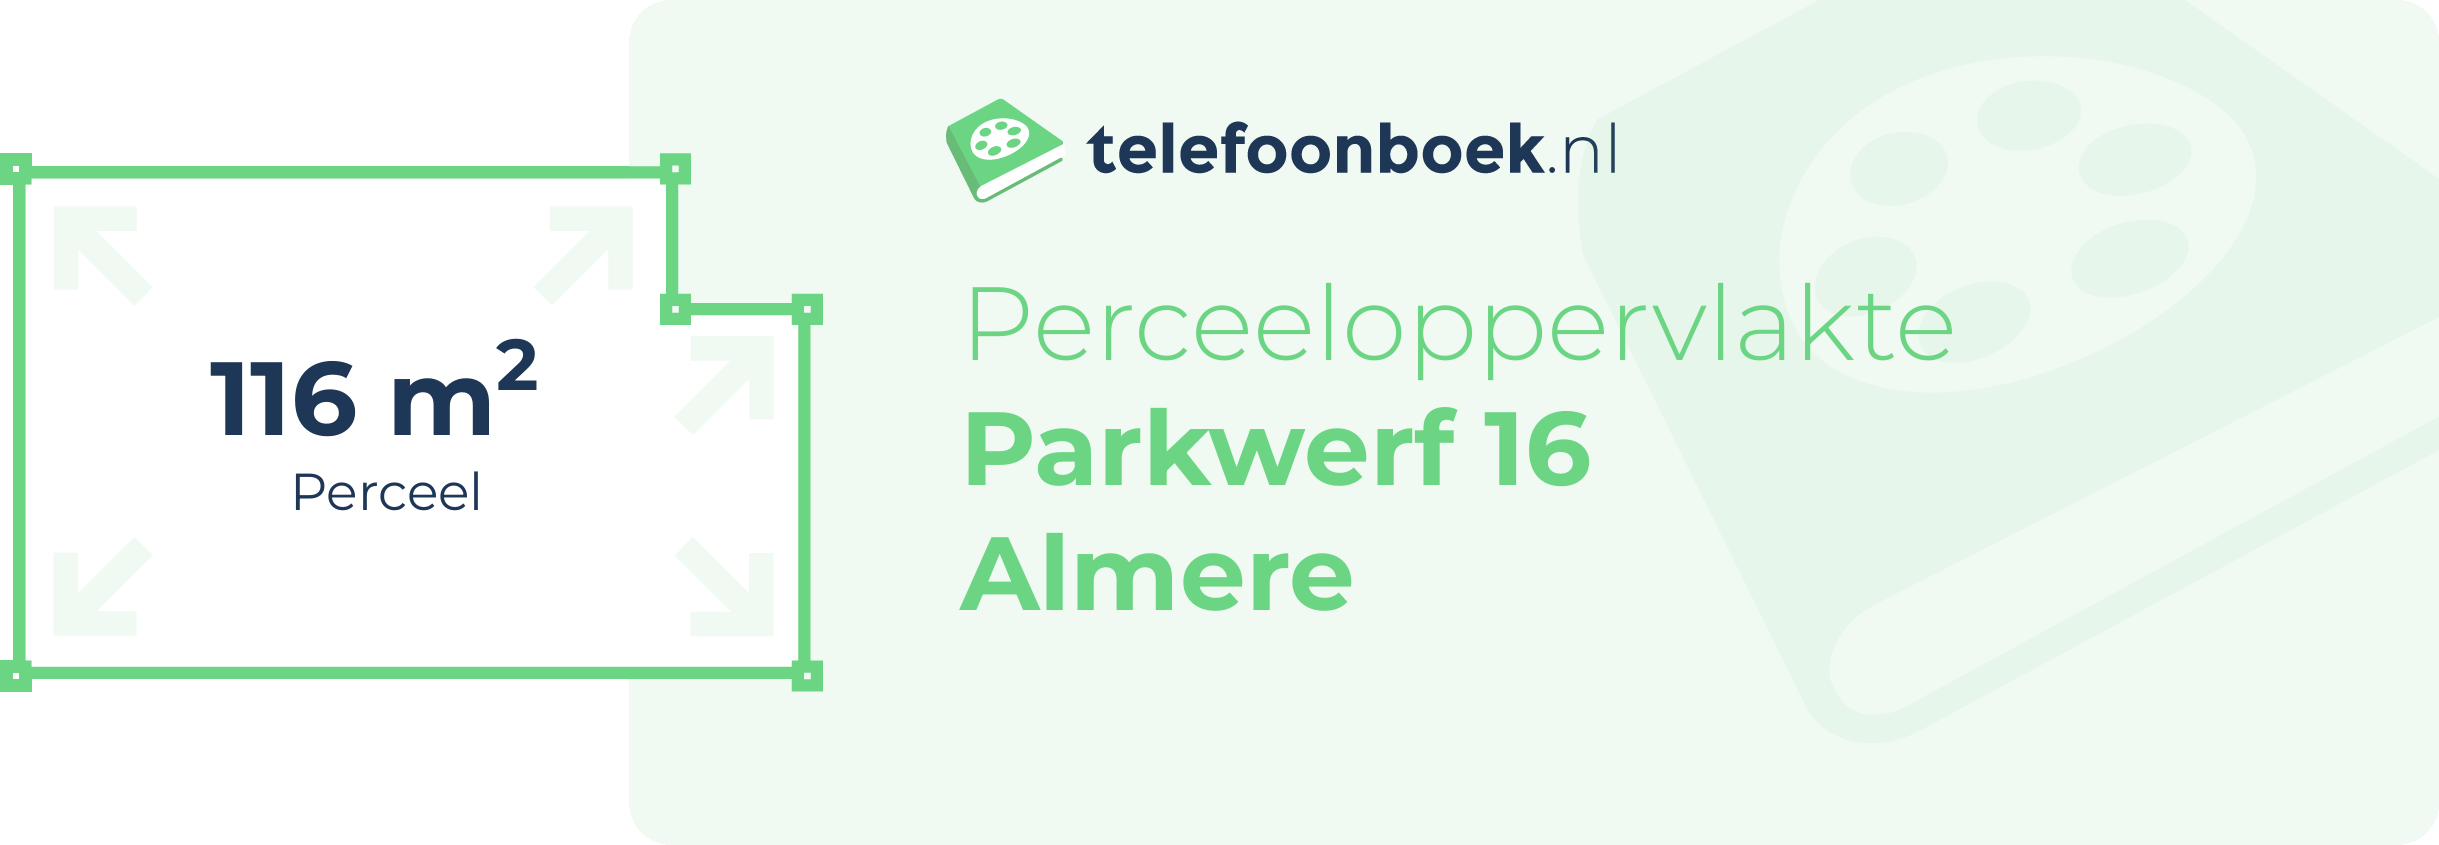 Perceeloppervlakte Parkwerf 16 Almere